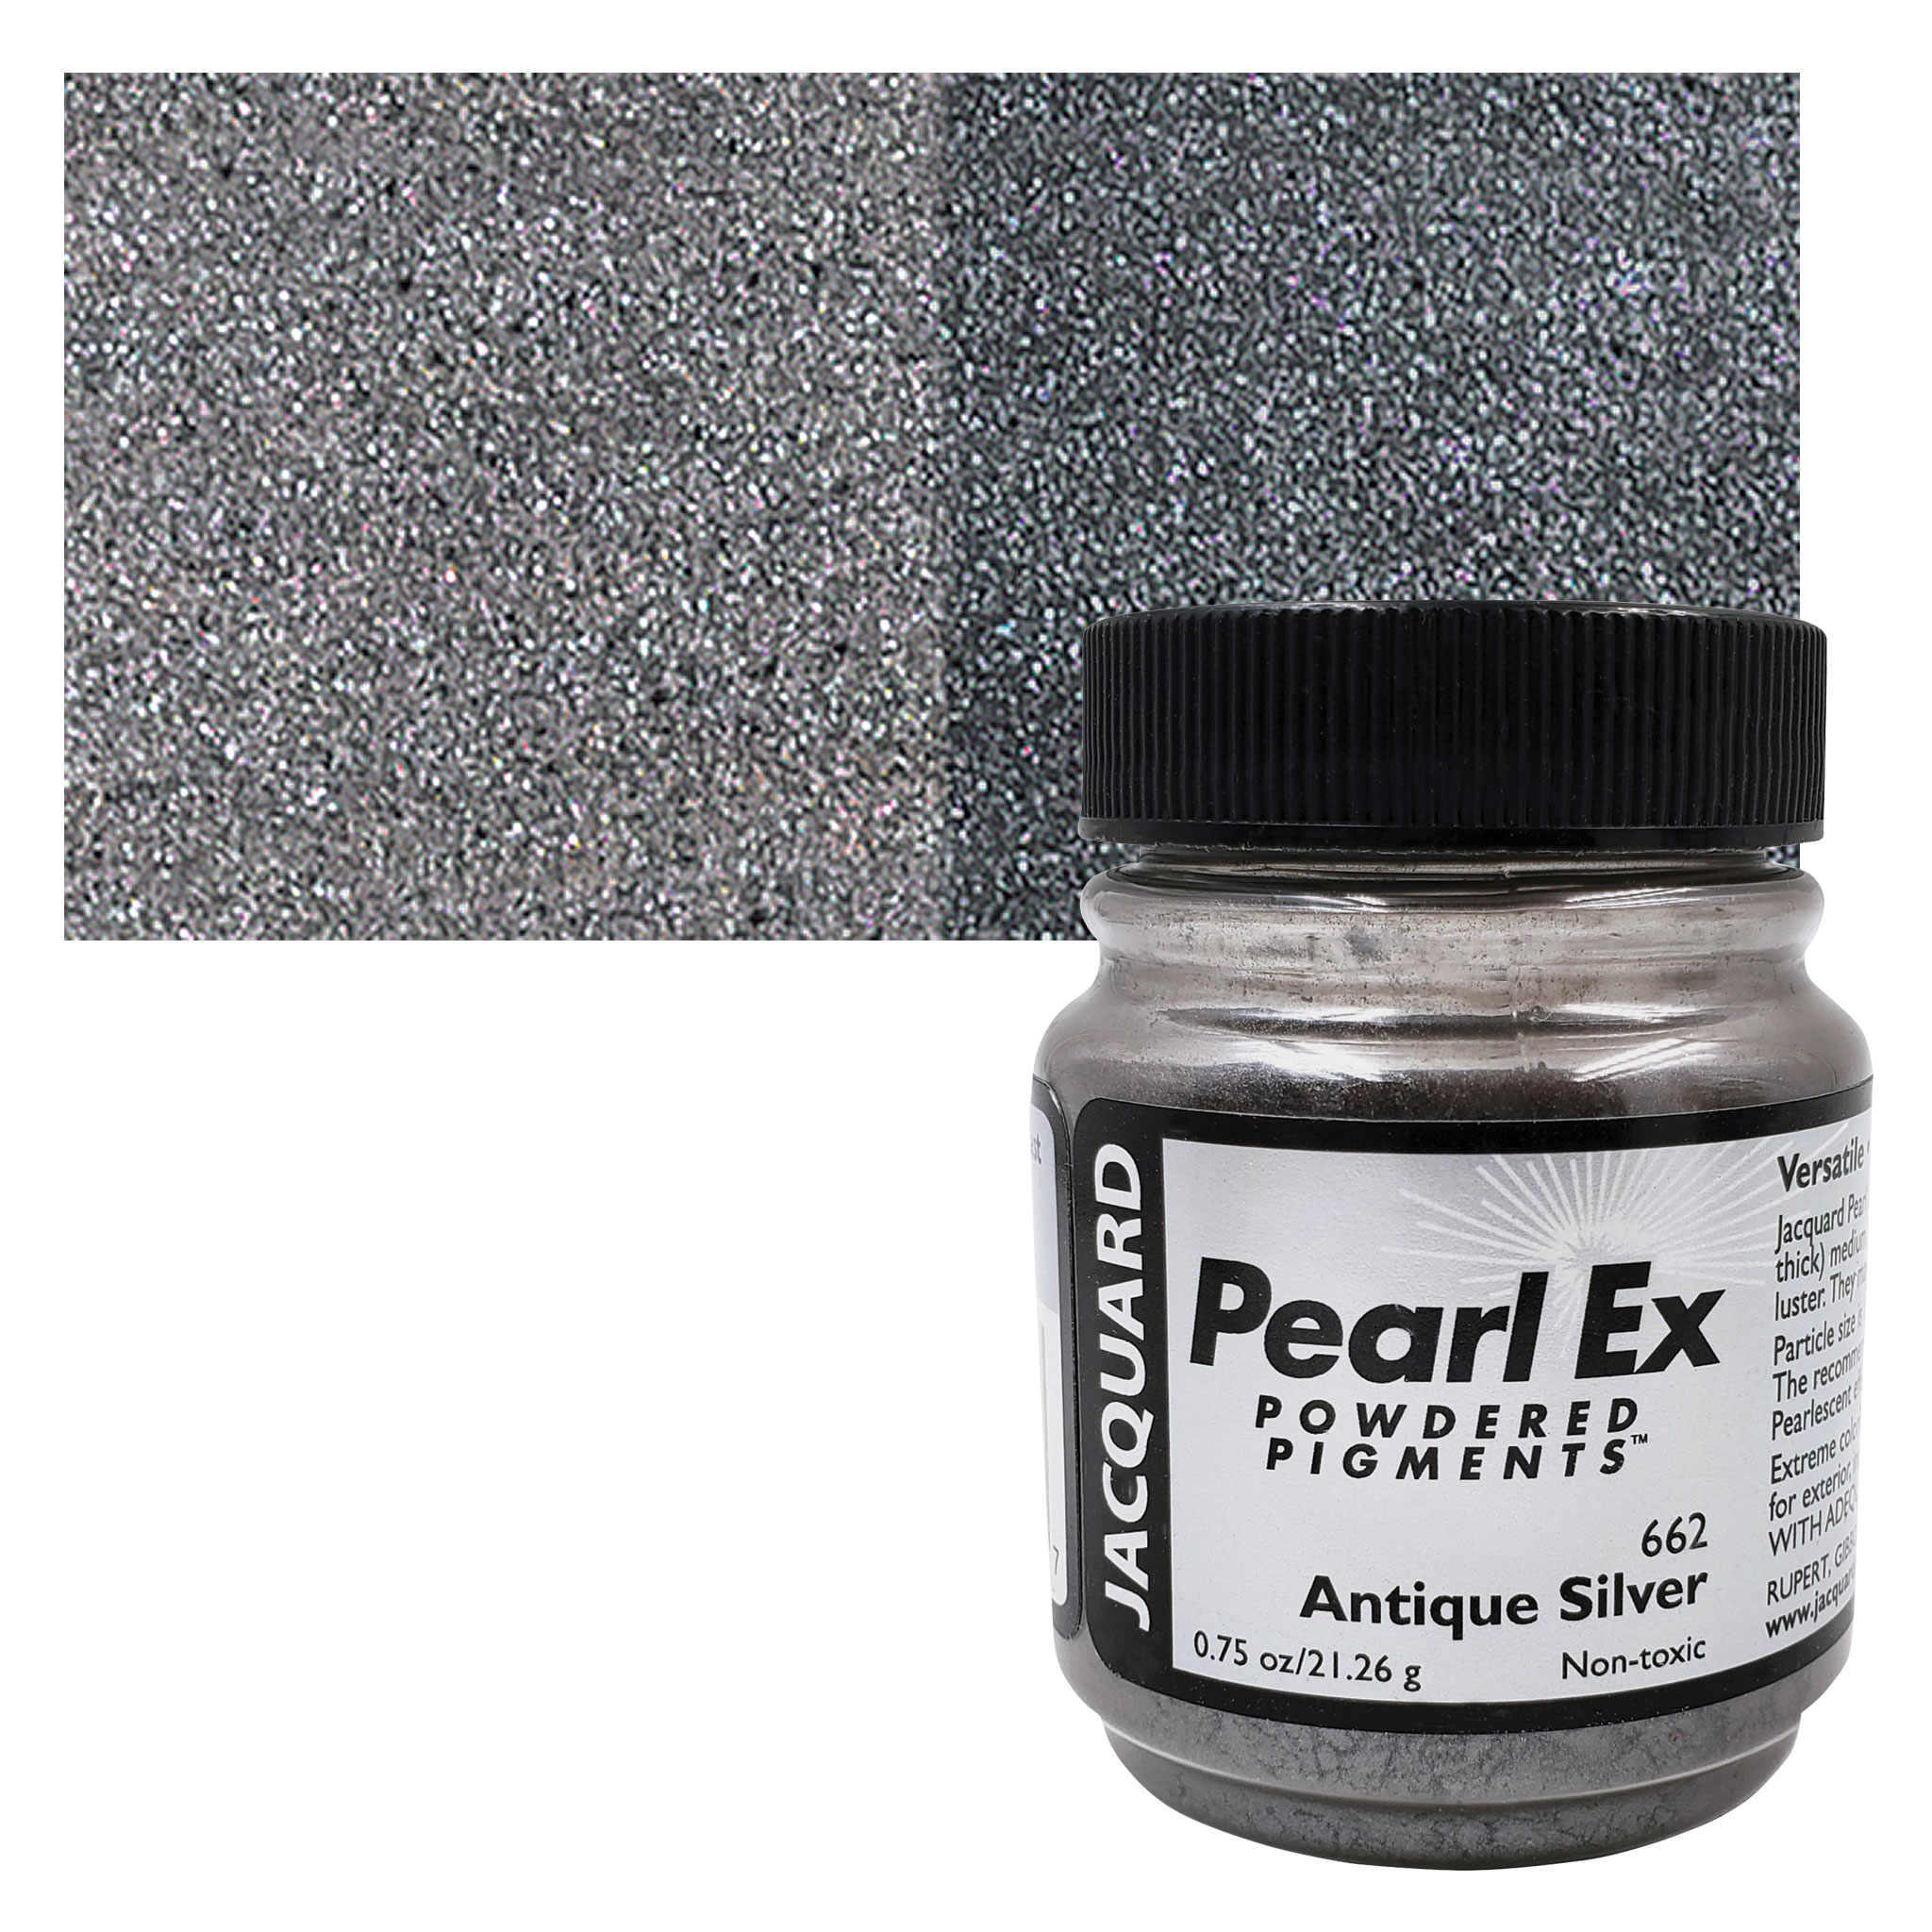 Jacquard Pearl Ex Powdered Pigments 3g 12/Pkg - Series 1 - 2311914